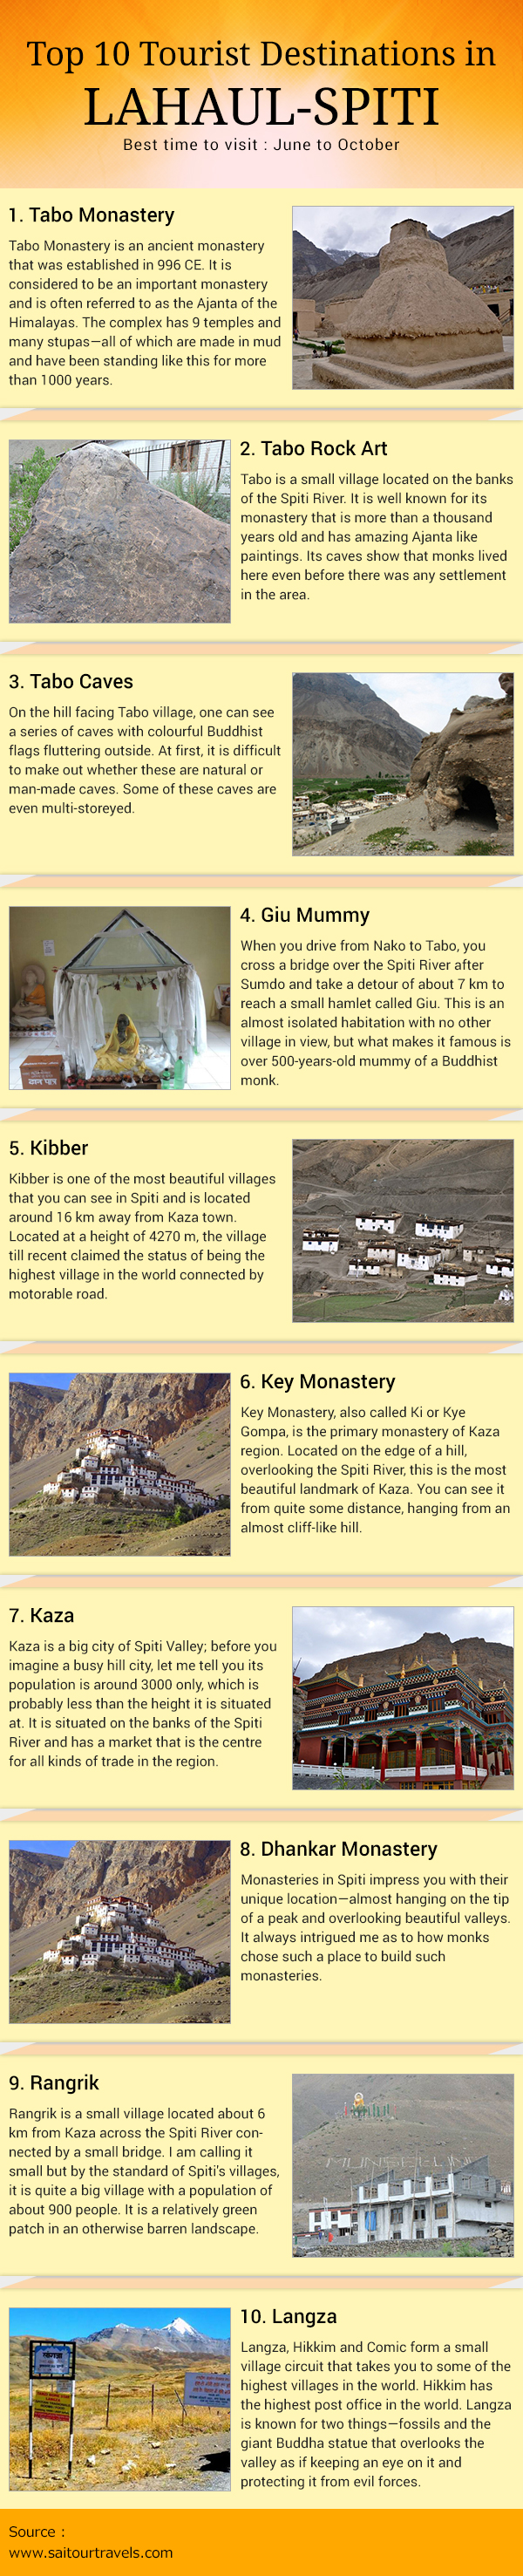 Top 10 Tourist Destinations in Lahaul Spiti